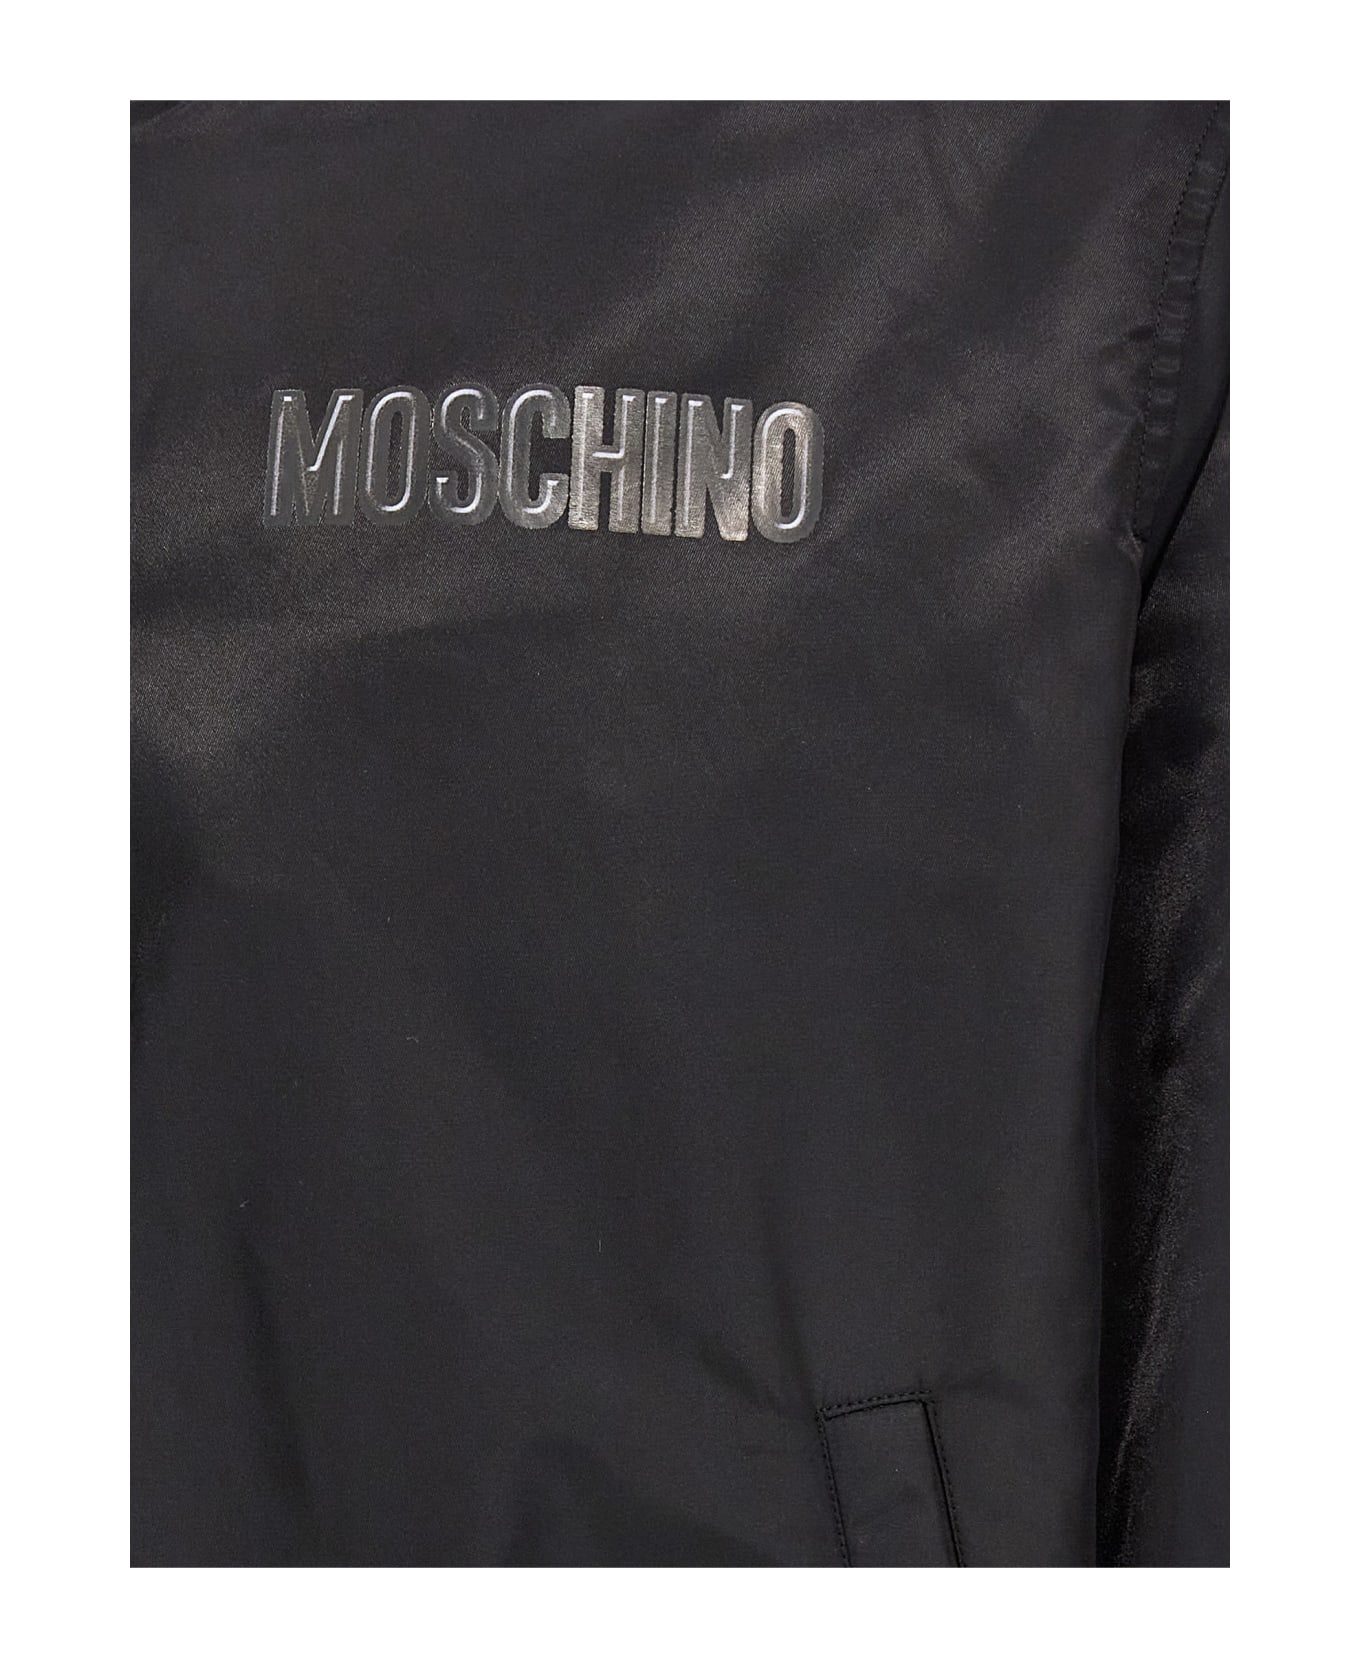 Moschino Teddy Bomber Jacket - Black   ジャケット